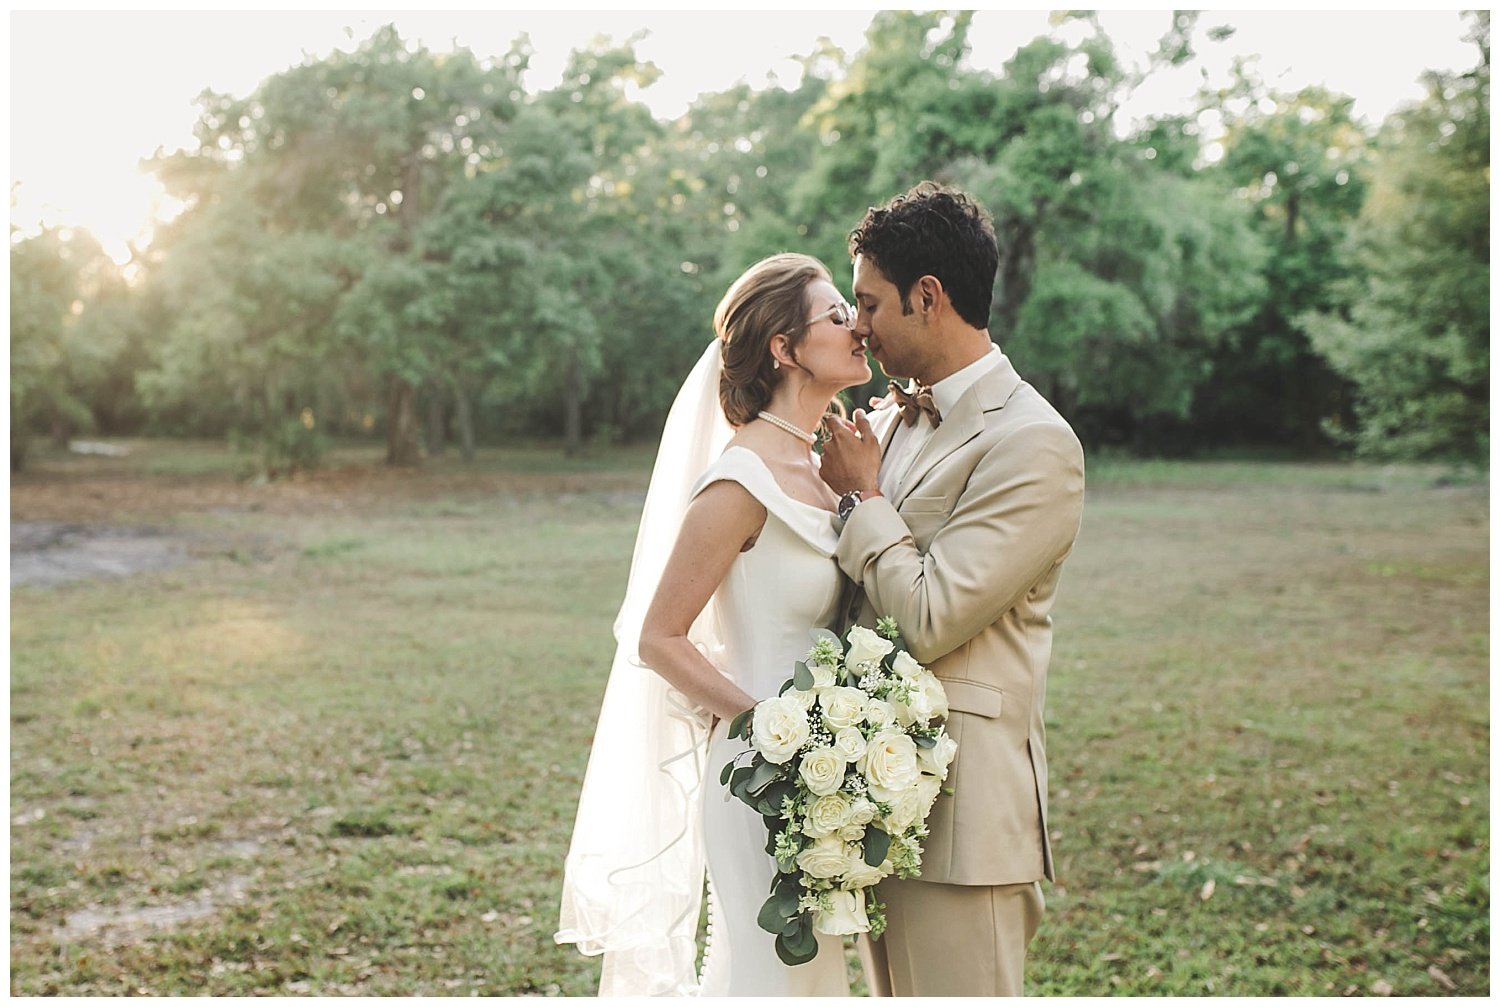 Still Creek Farm: A Serene Haven for Picture-Perfect Wedding Celebrations